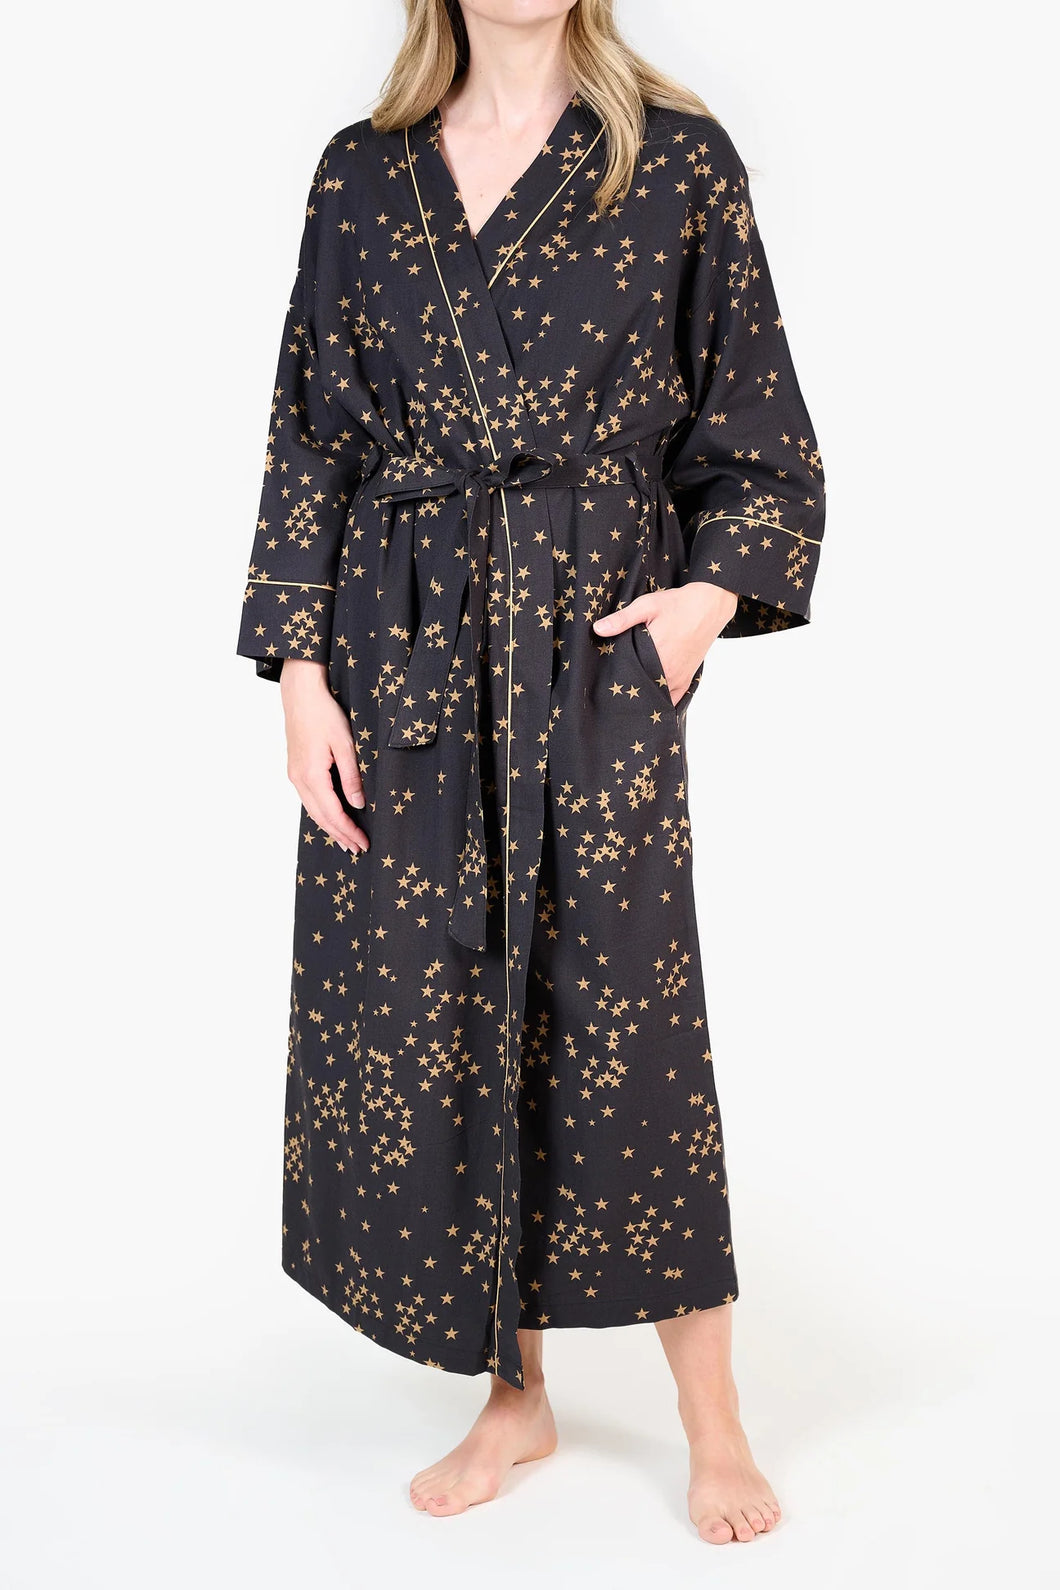 Celestial design robe - gold stars on dark grey 